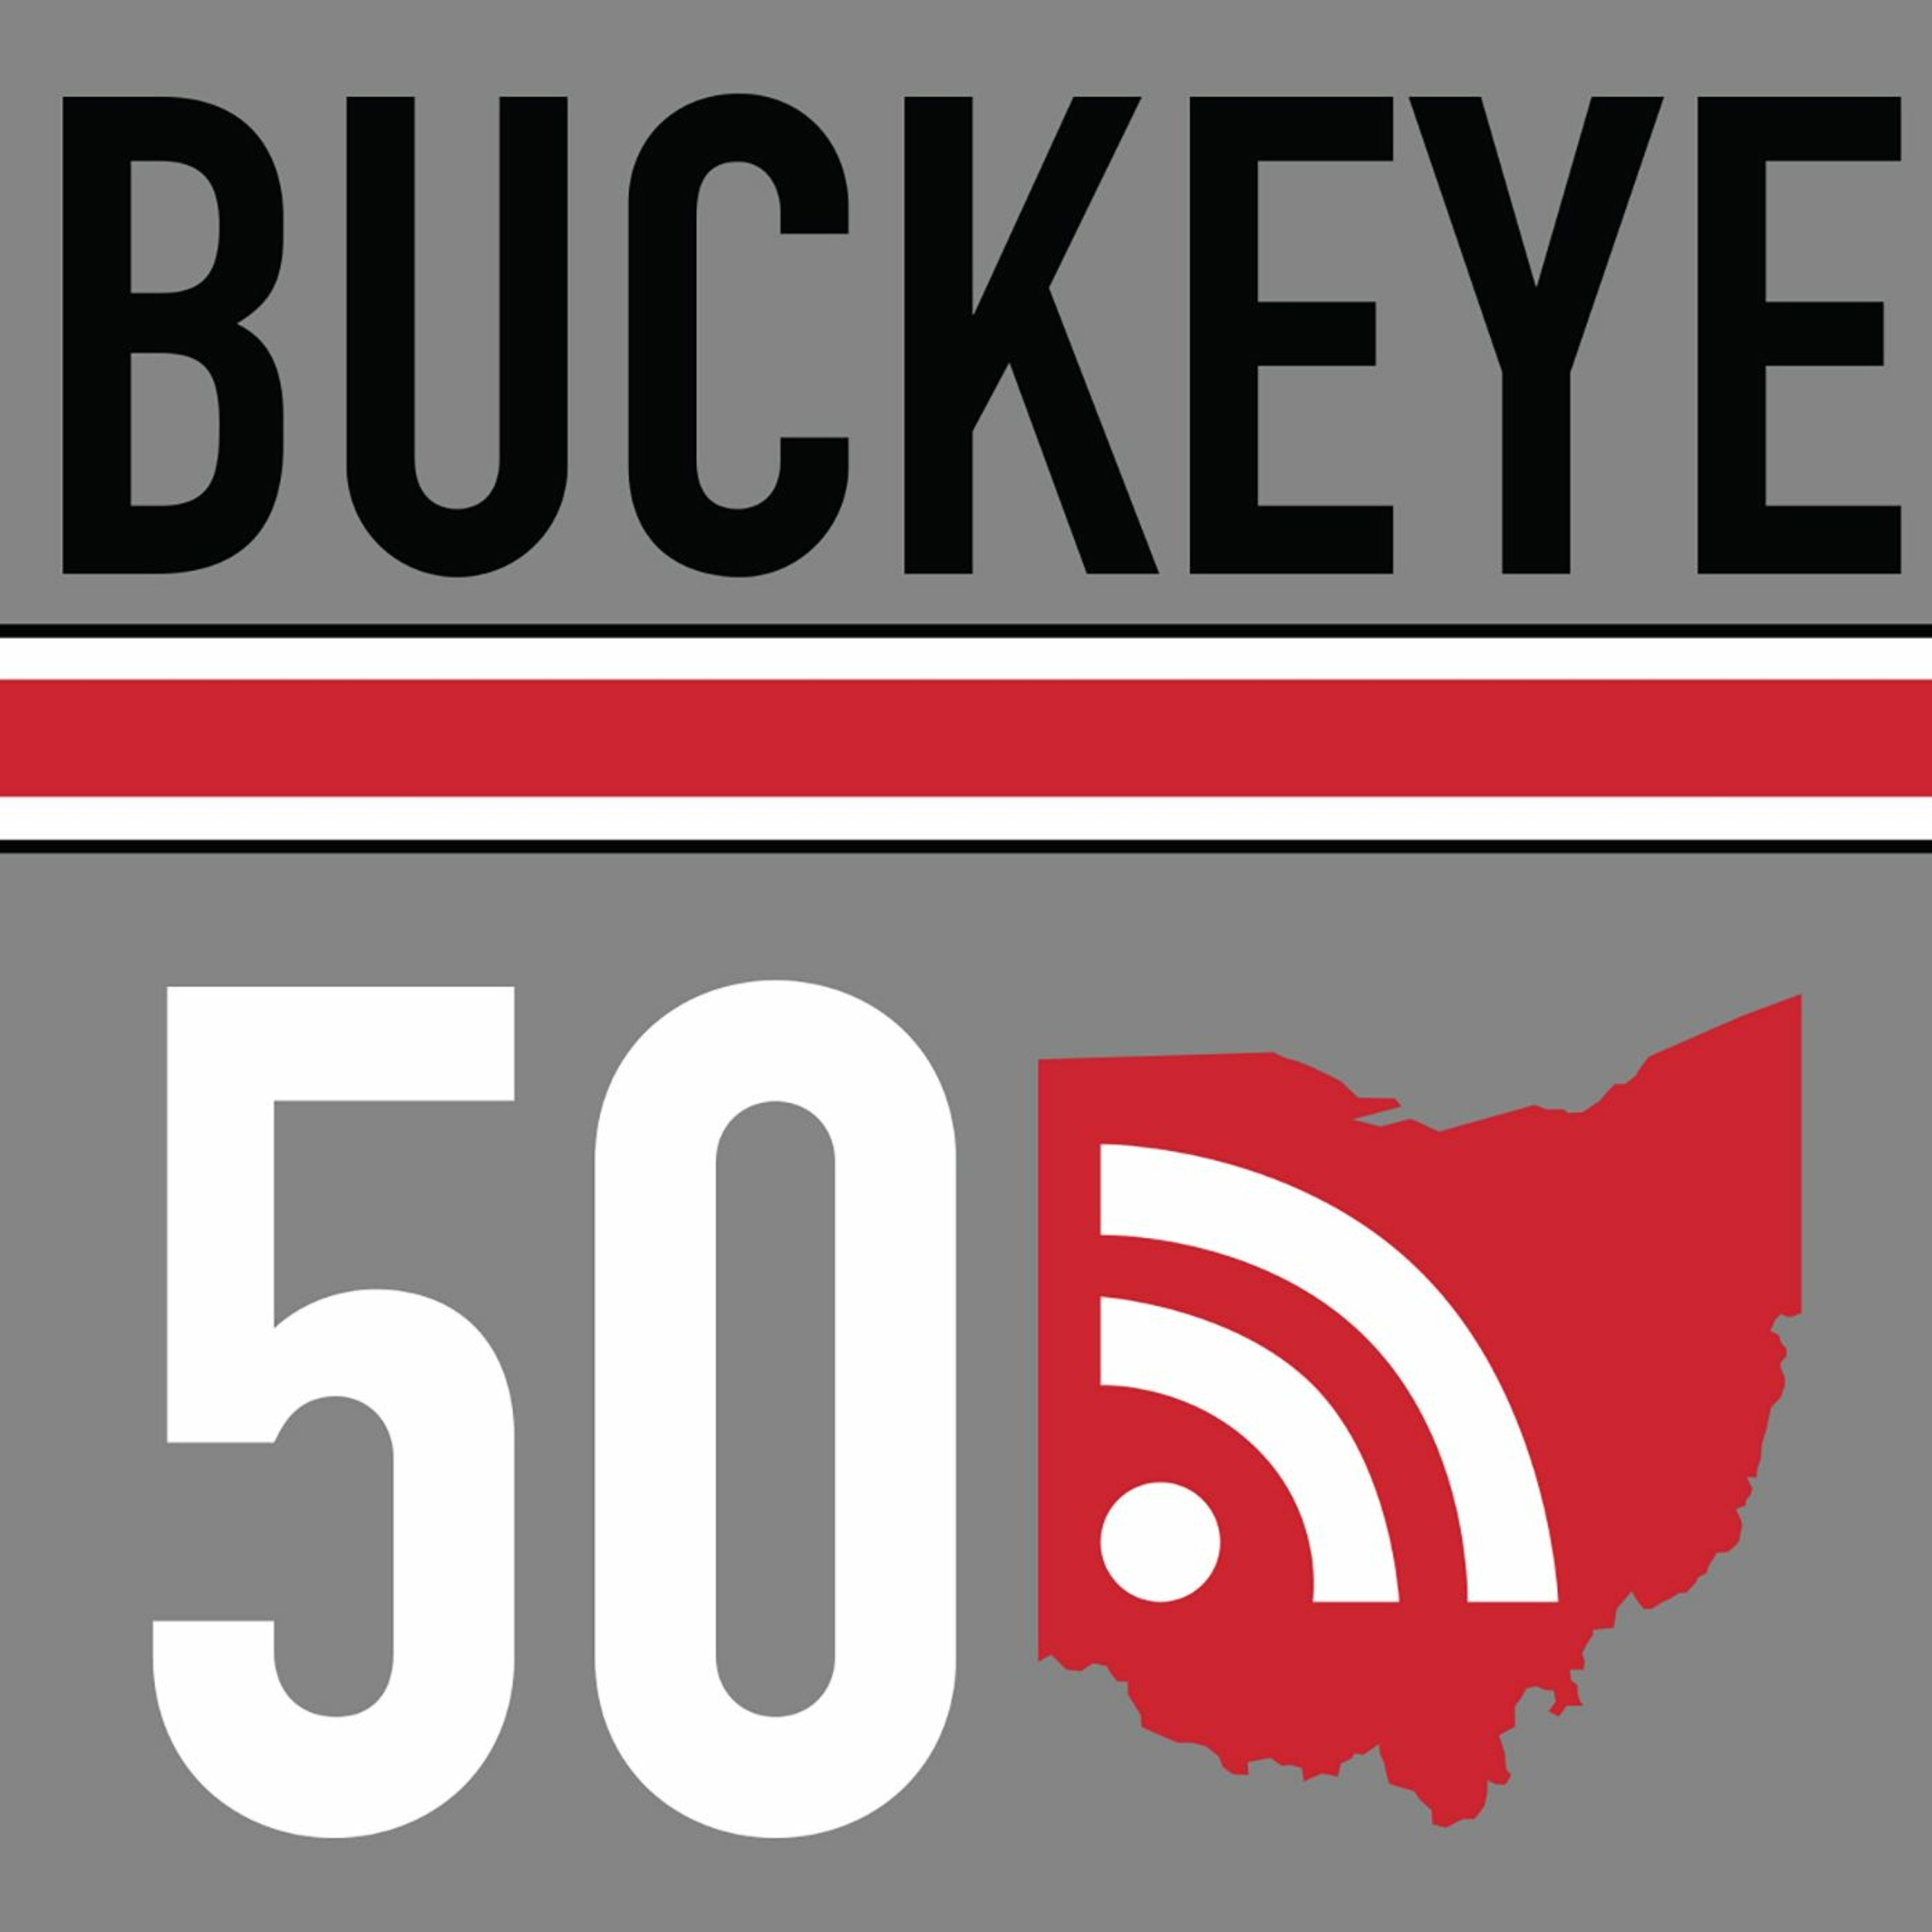 Buckeye50 Podcast - July 25, 2017